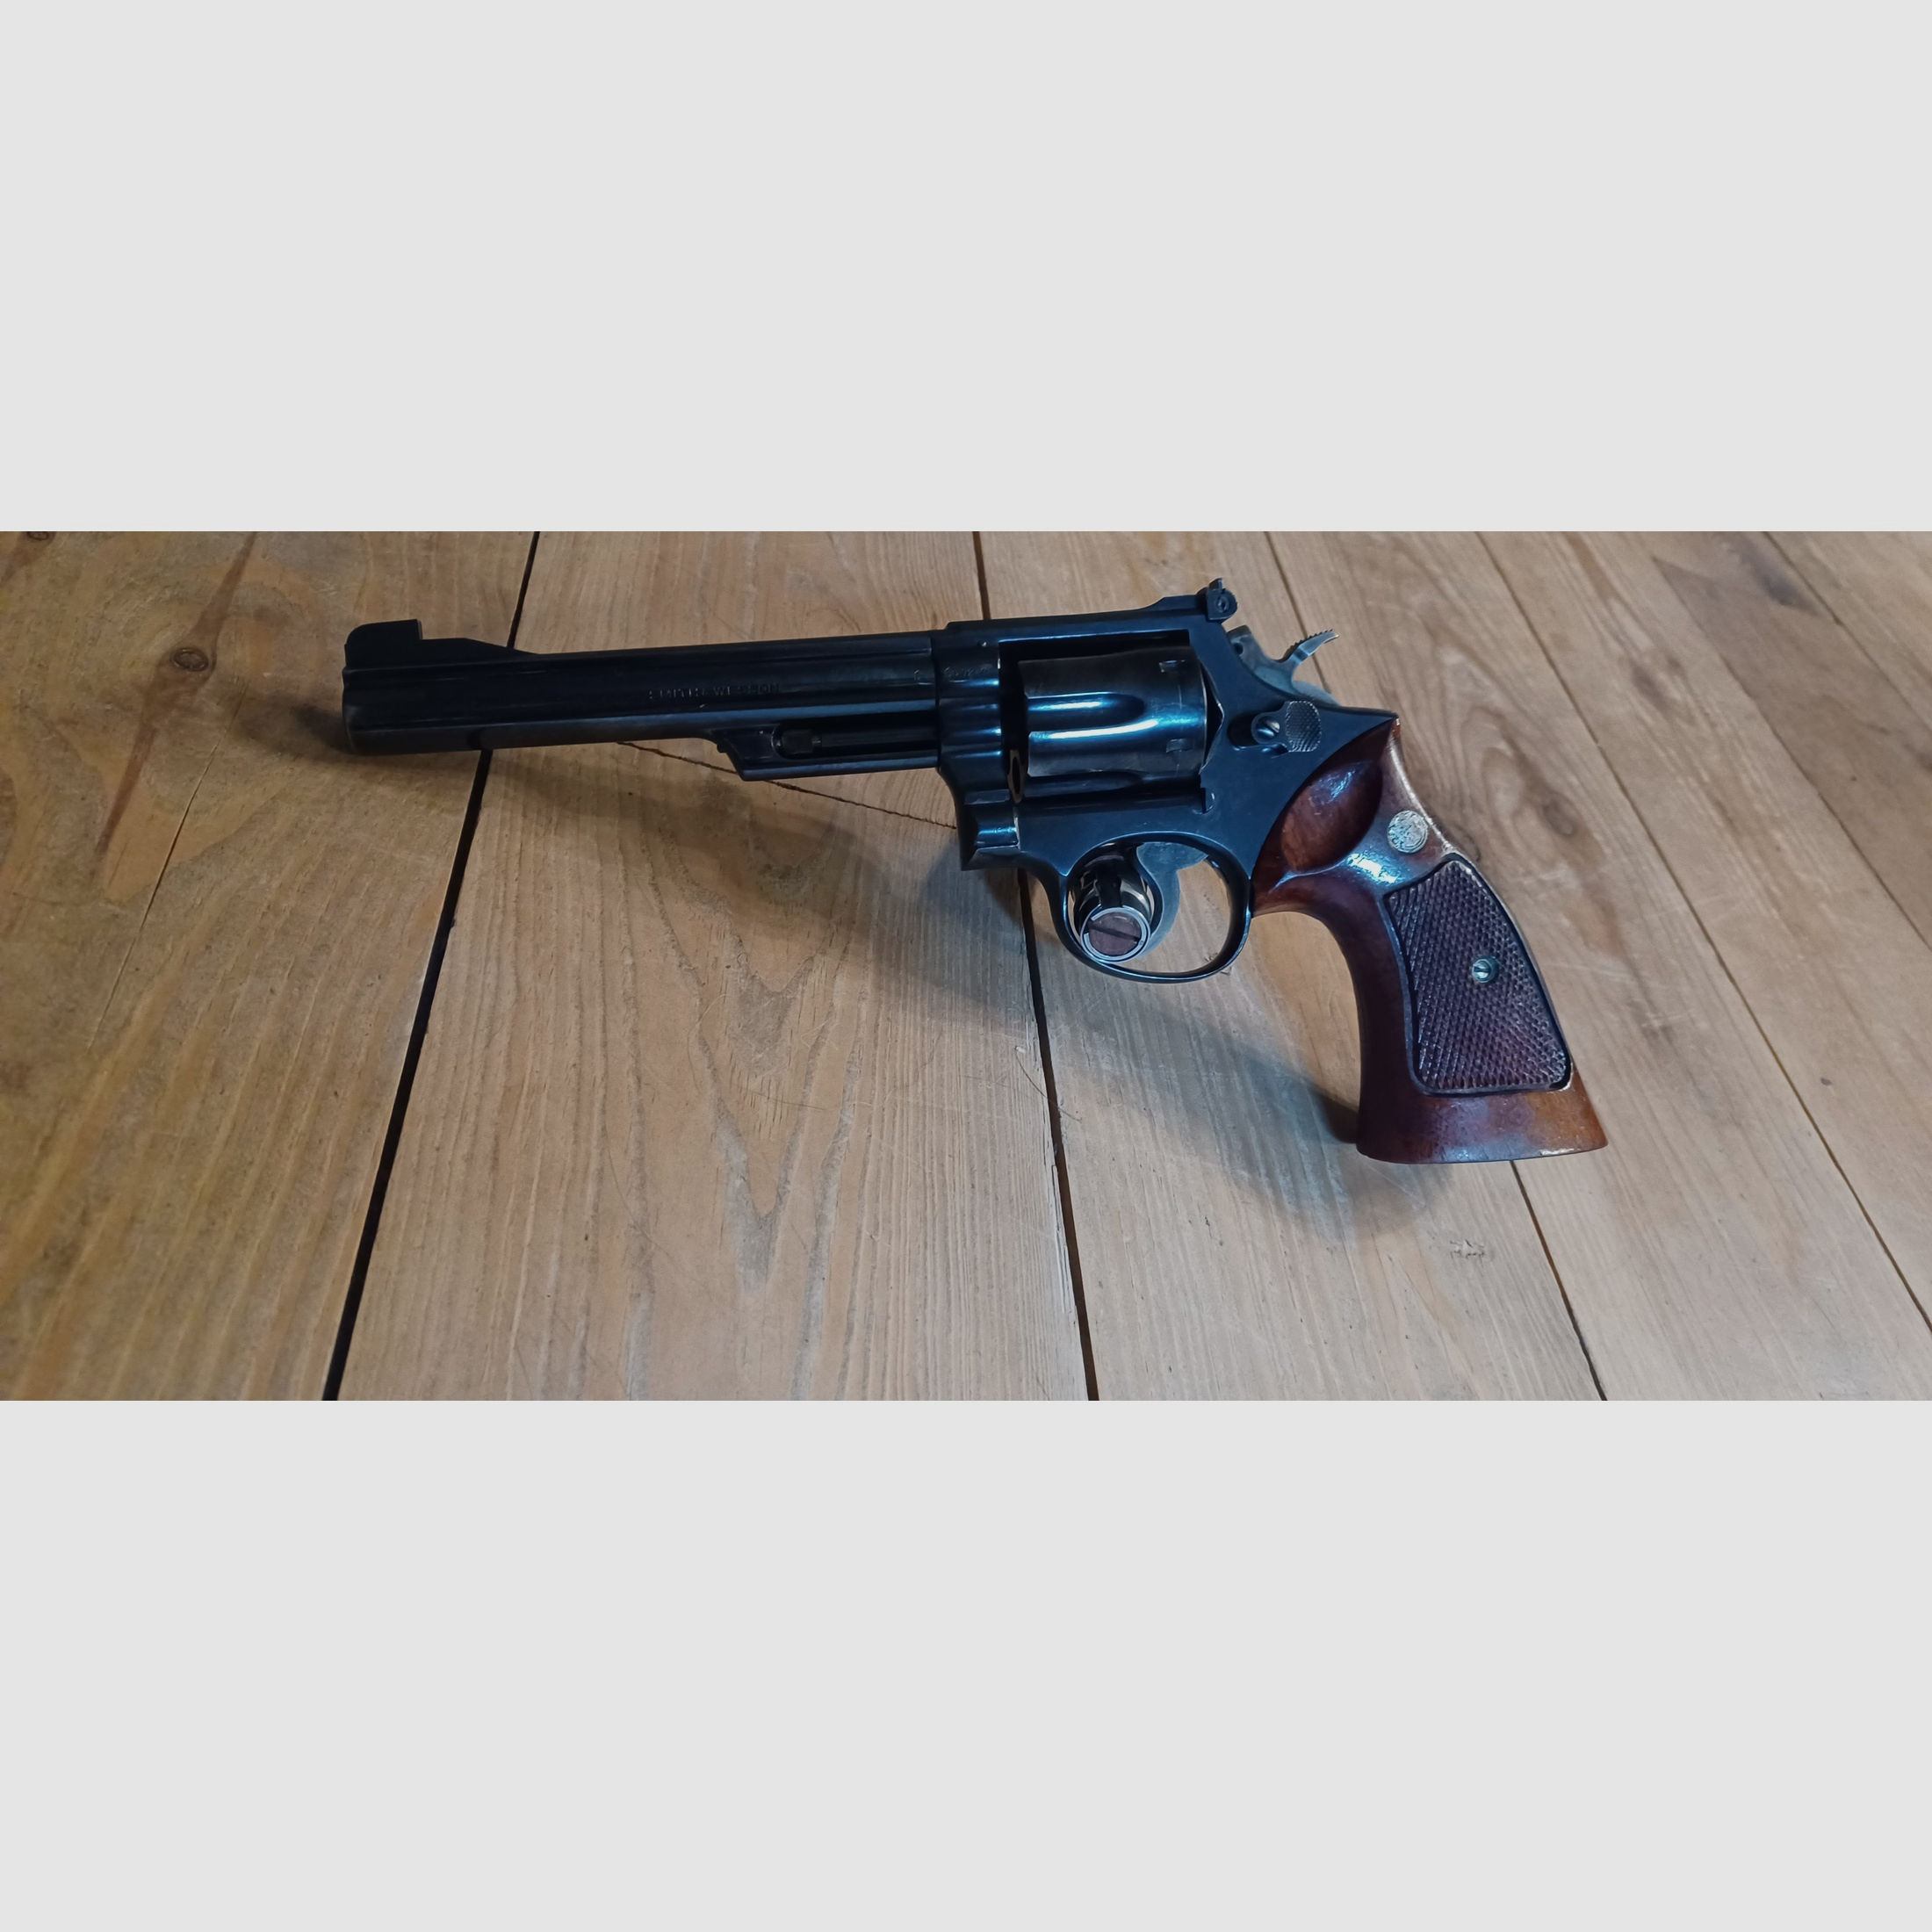 Smith & Wesson .357 Combat Magnum, K 19-3, blue Finish, Revolver